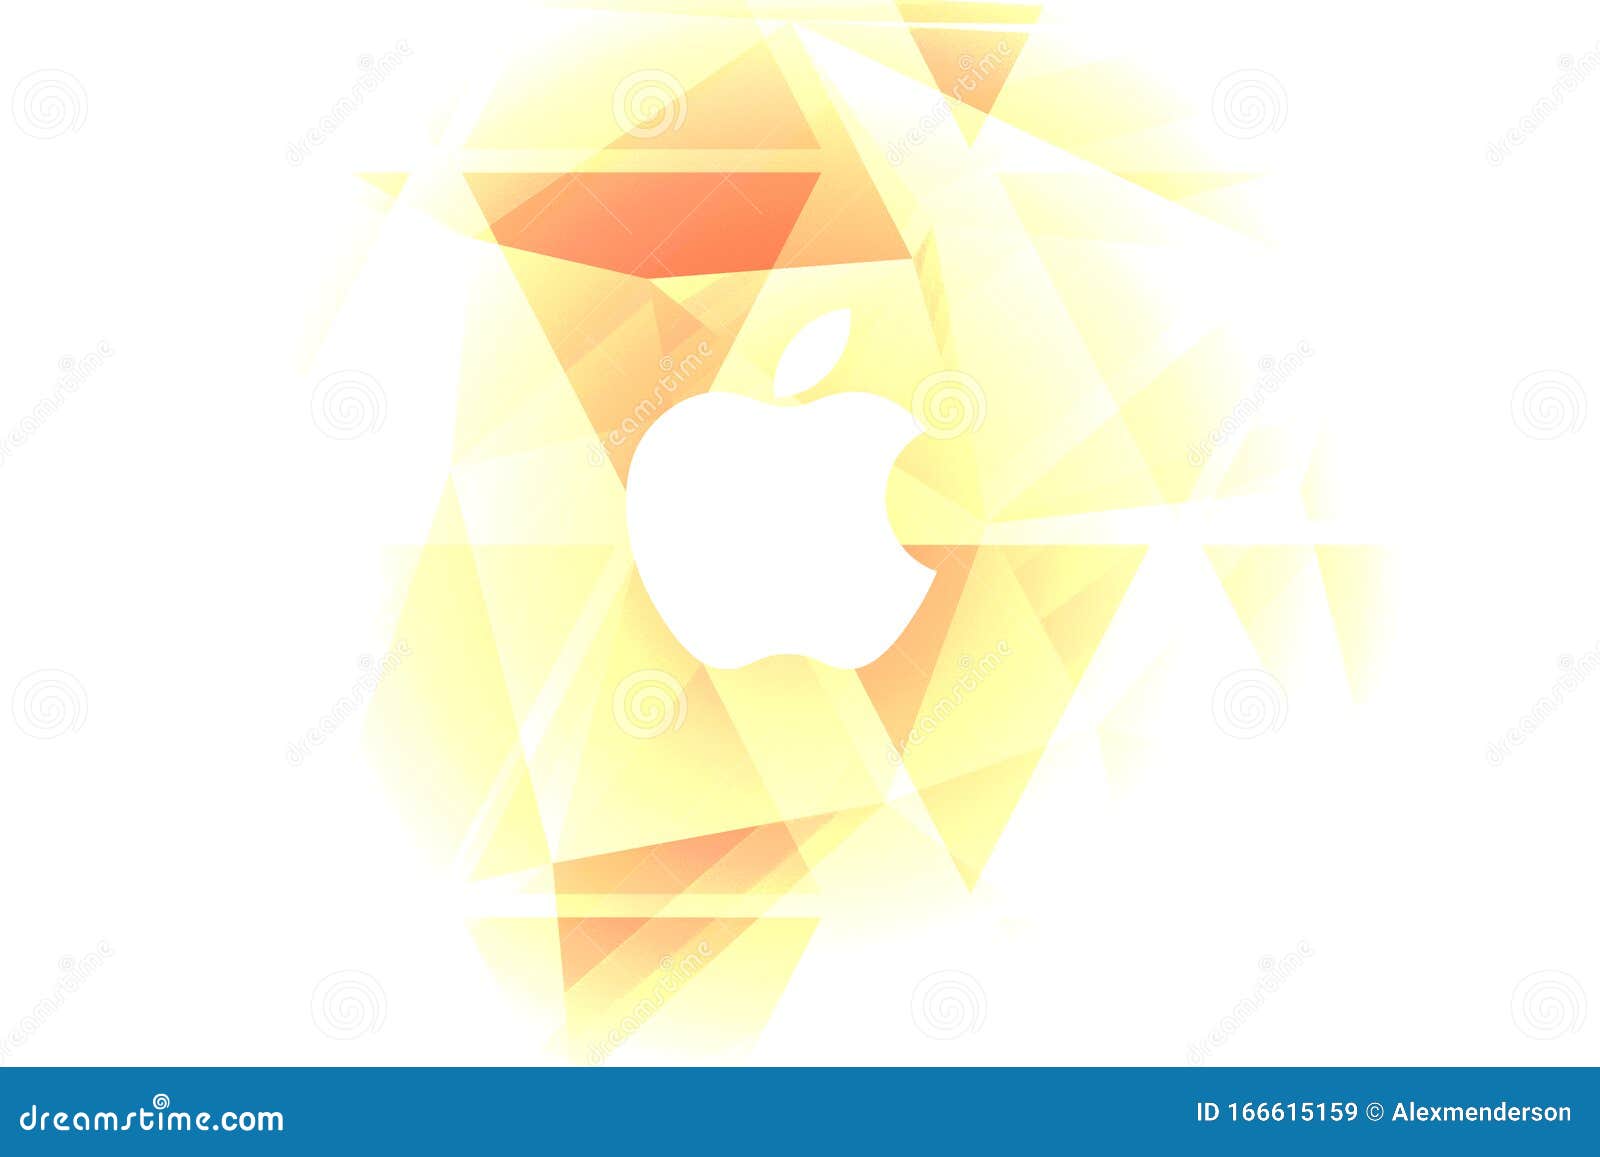 Simple Apple Brand Logo Wallpaper Background With Geometric Shape